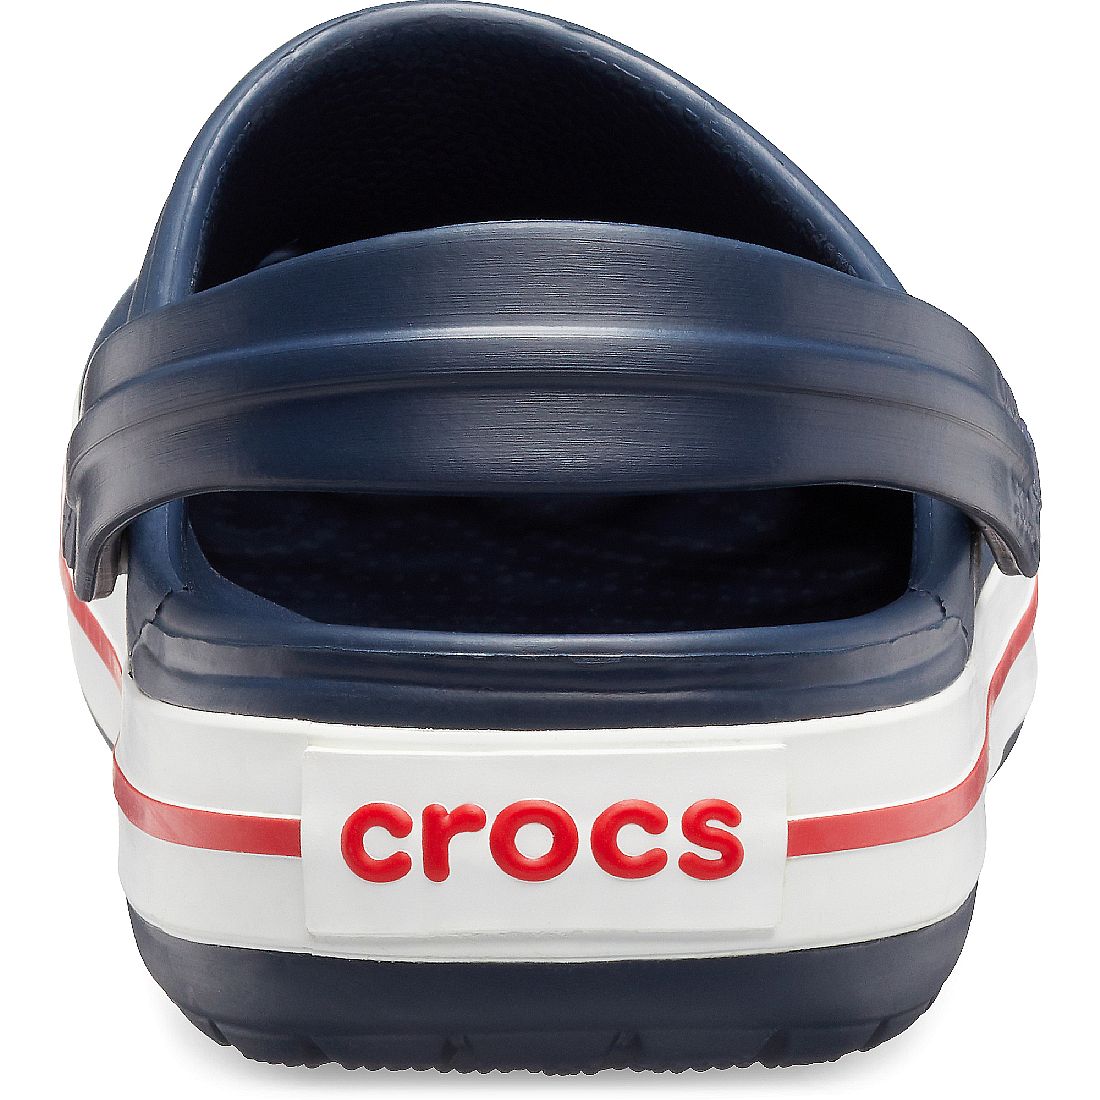 Crocs Crocband Clog Unisex Erwachsene 11016 Navy